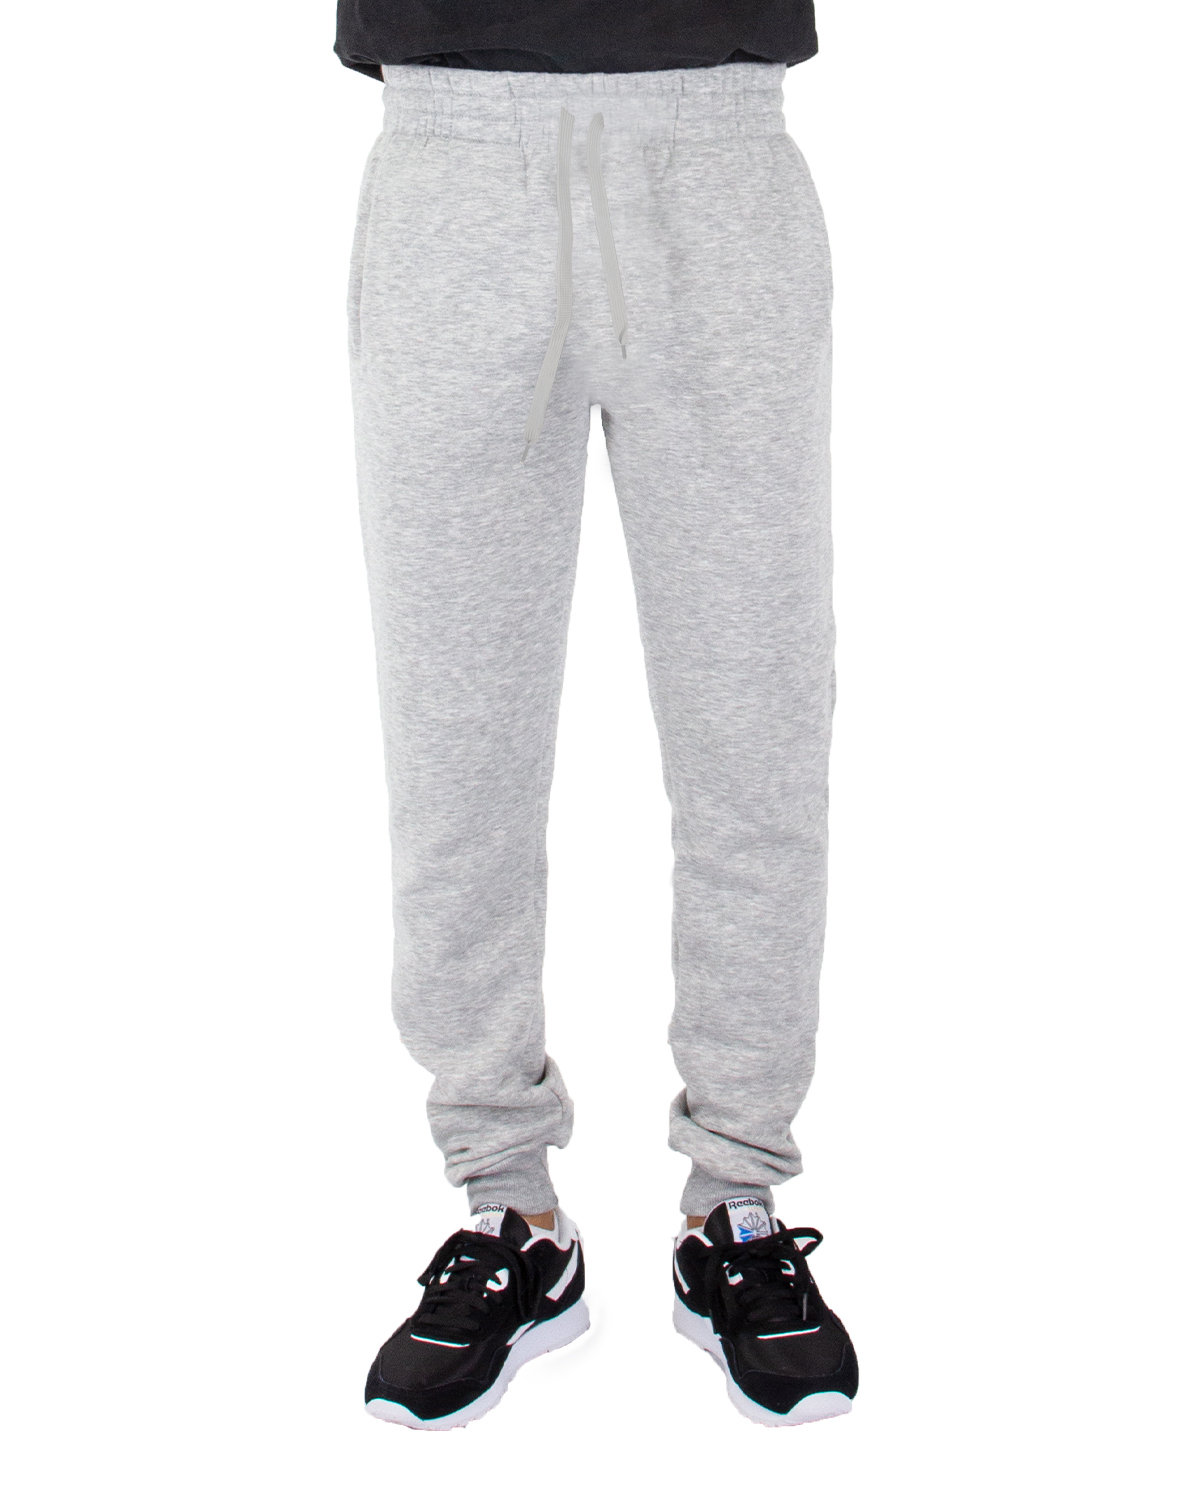 Shaka Wear Men's Fleece Jogger Pants | Generic Site - Priced